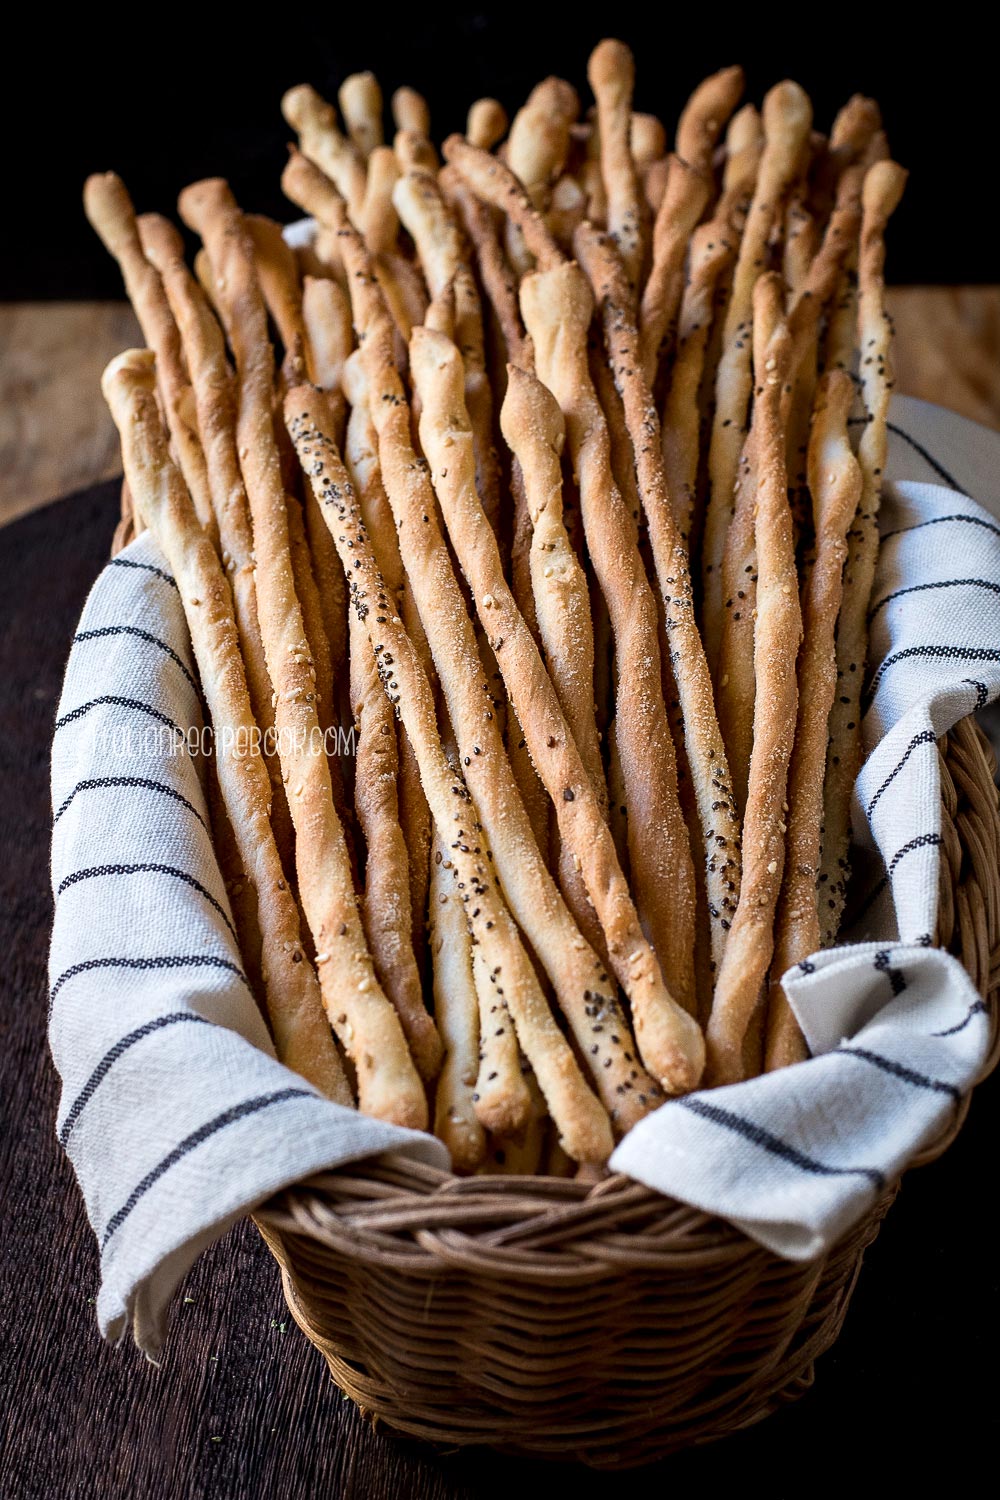 a bread basket full of grissini breadsticks